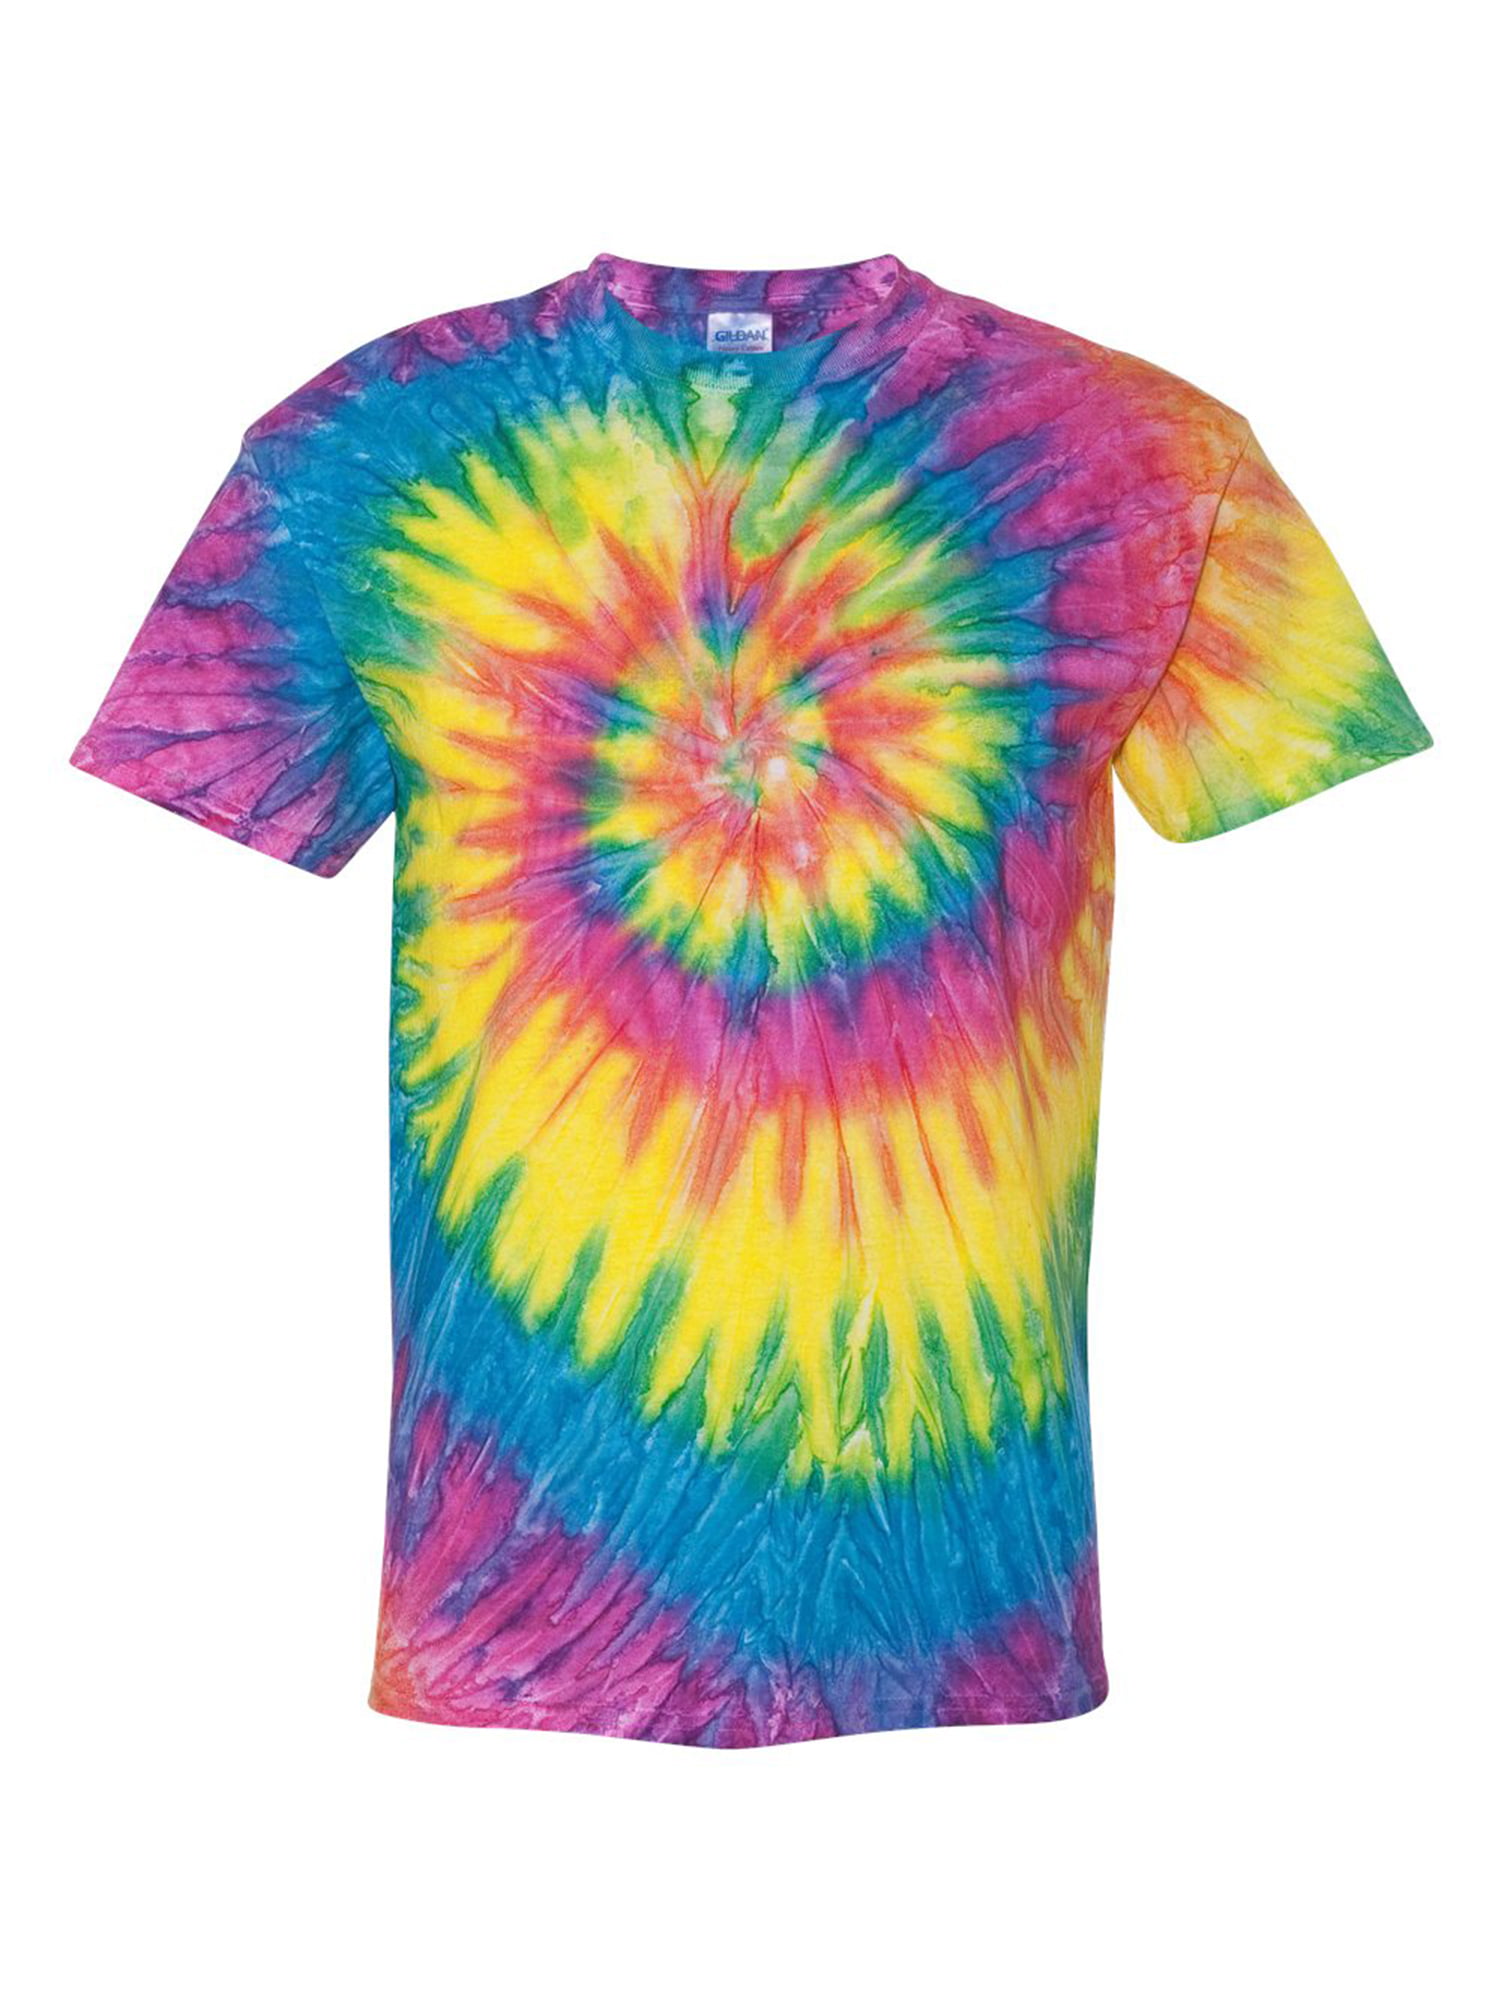 Step mom gift Tye dye shirts Womens tie dye shirt Hippie clothing